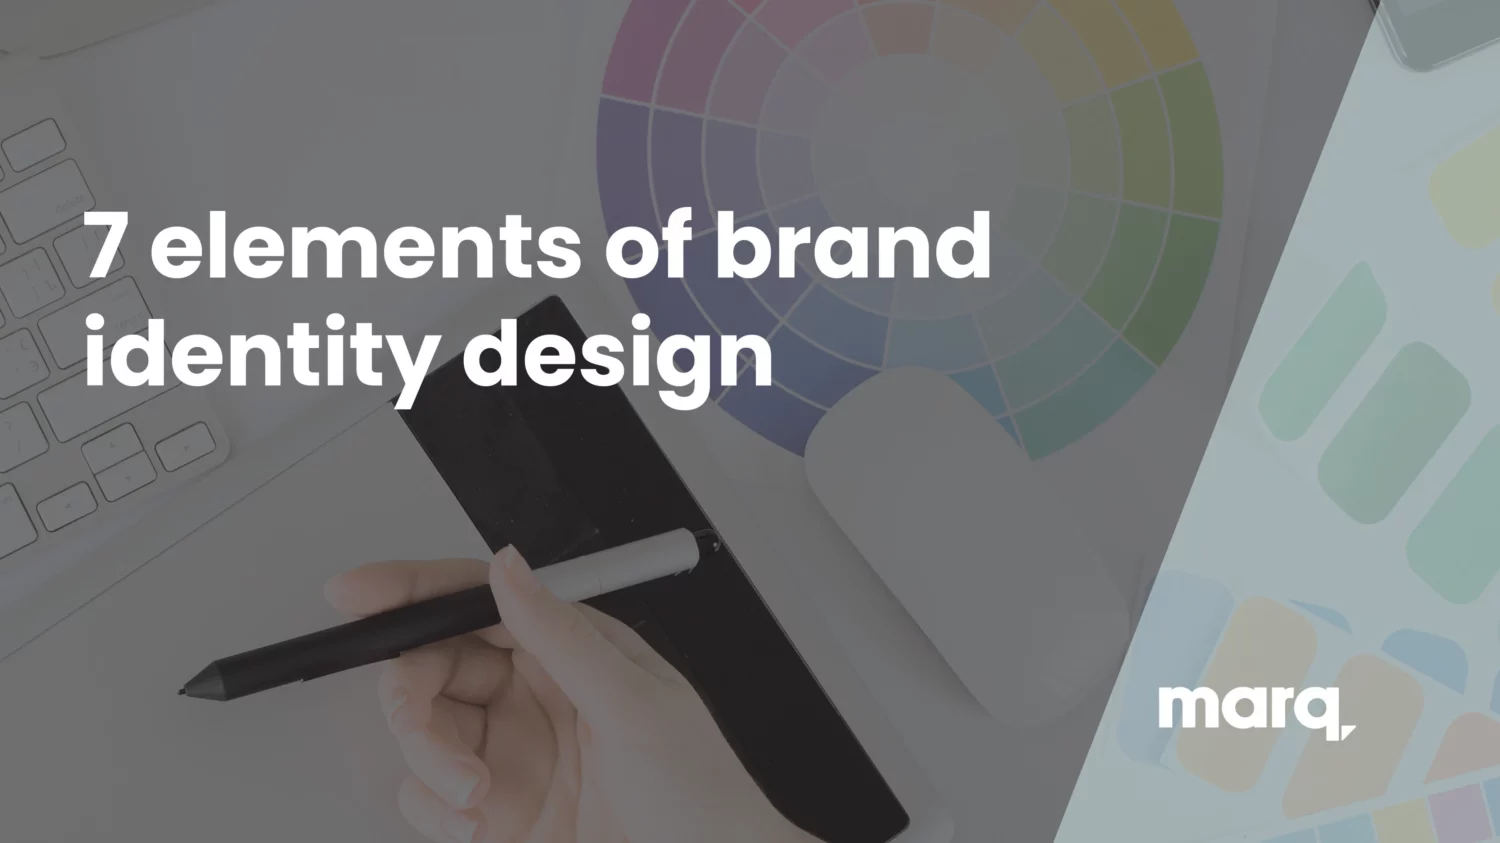 7 elements of brand identity